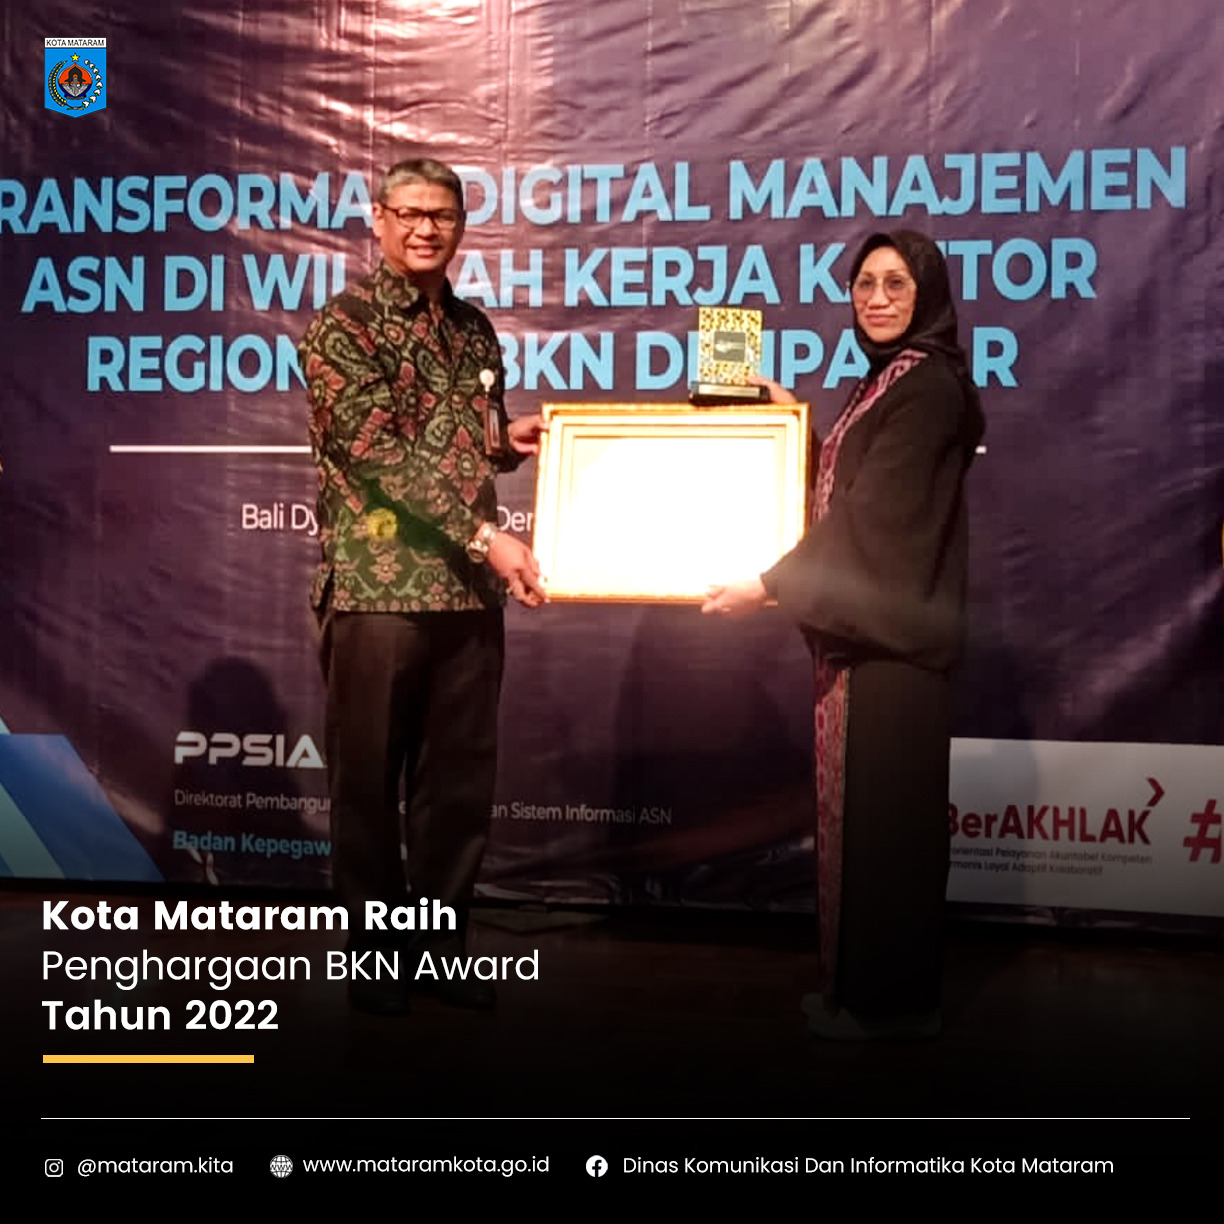 Kota Mataram Raih Penghargaan BKN Award Tahun 2022